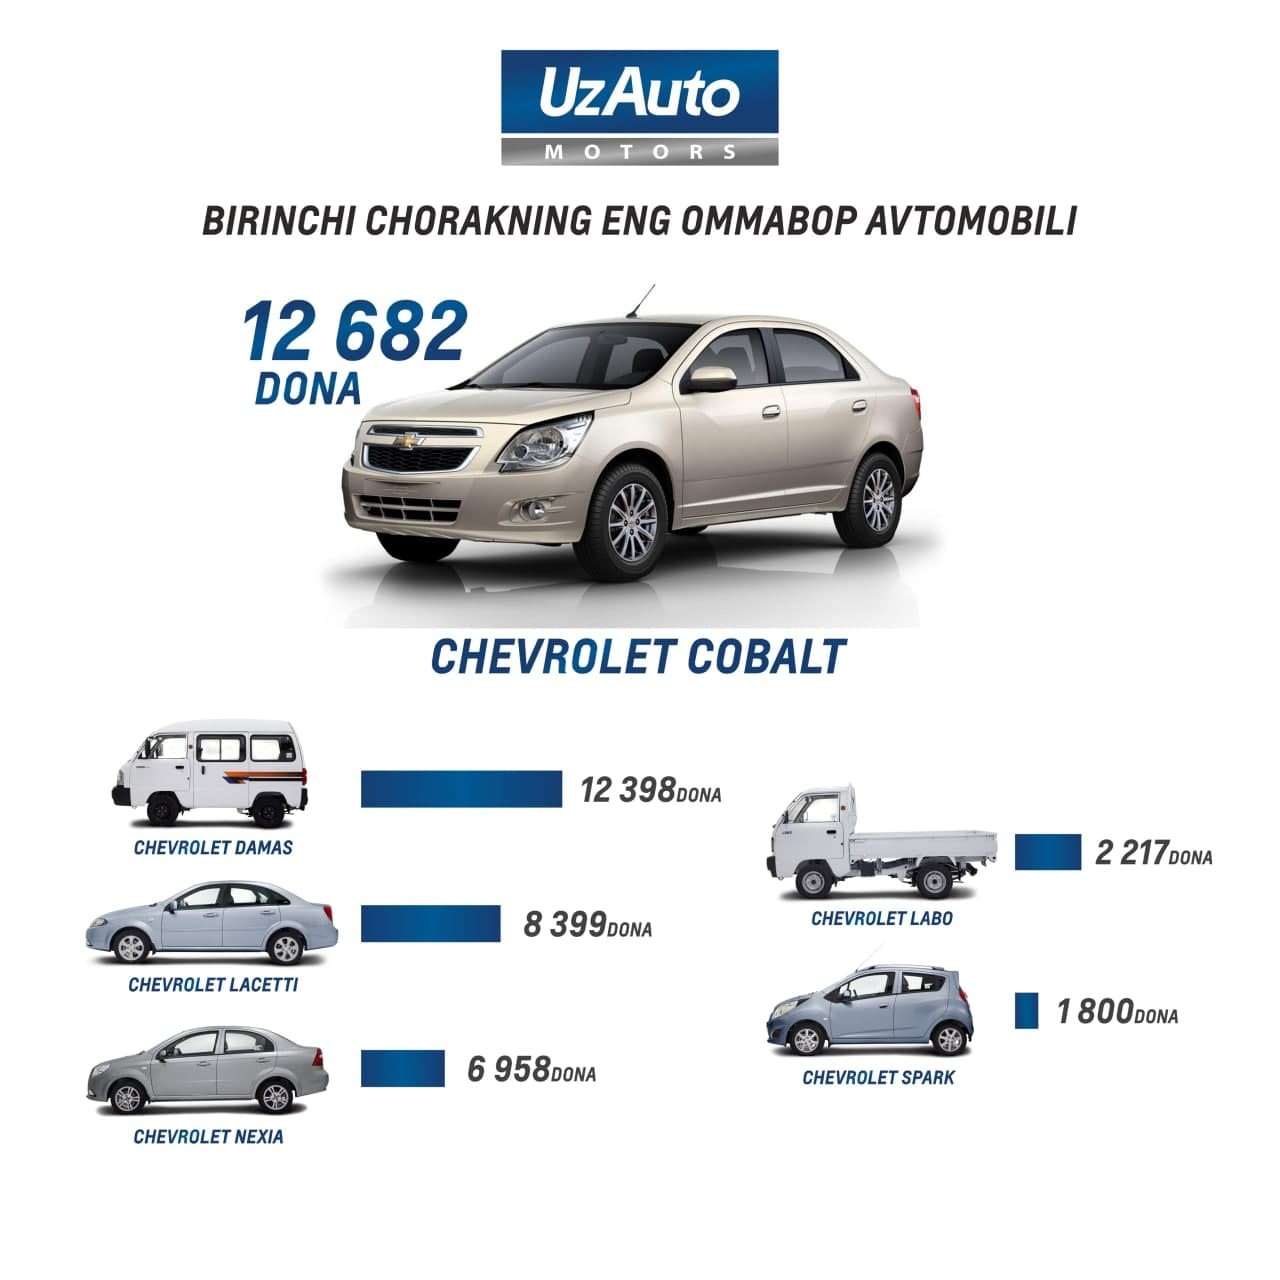 Chevrolet Cobalt - самая популярная модель